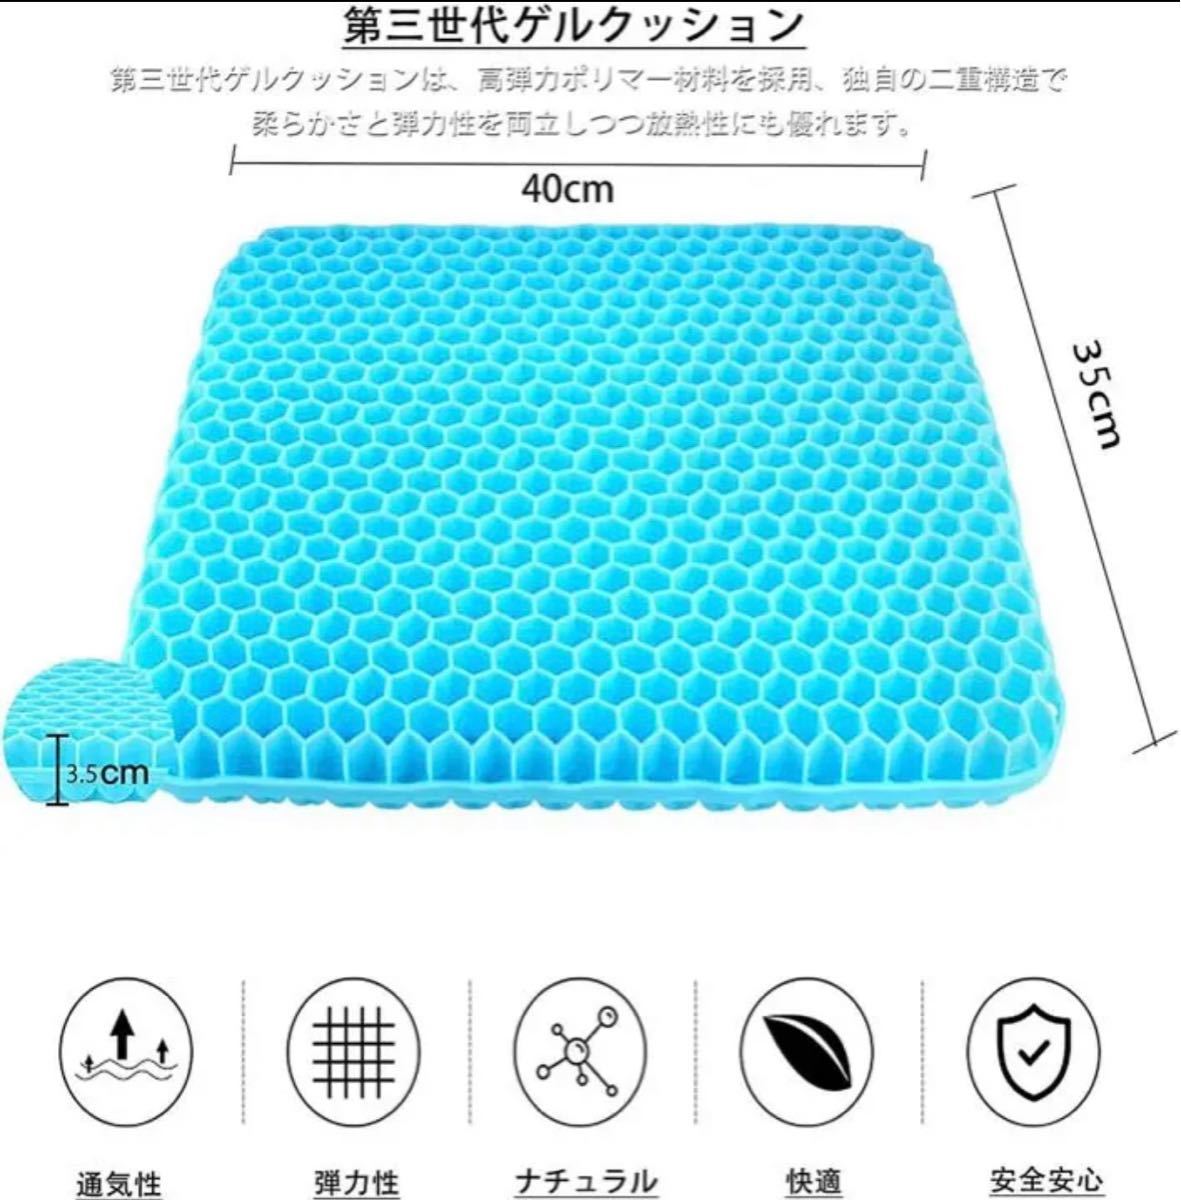  gel cushion zabuton cover attaching (40×35×3.5cm)